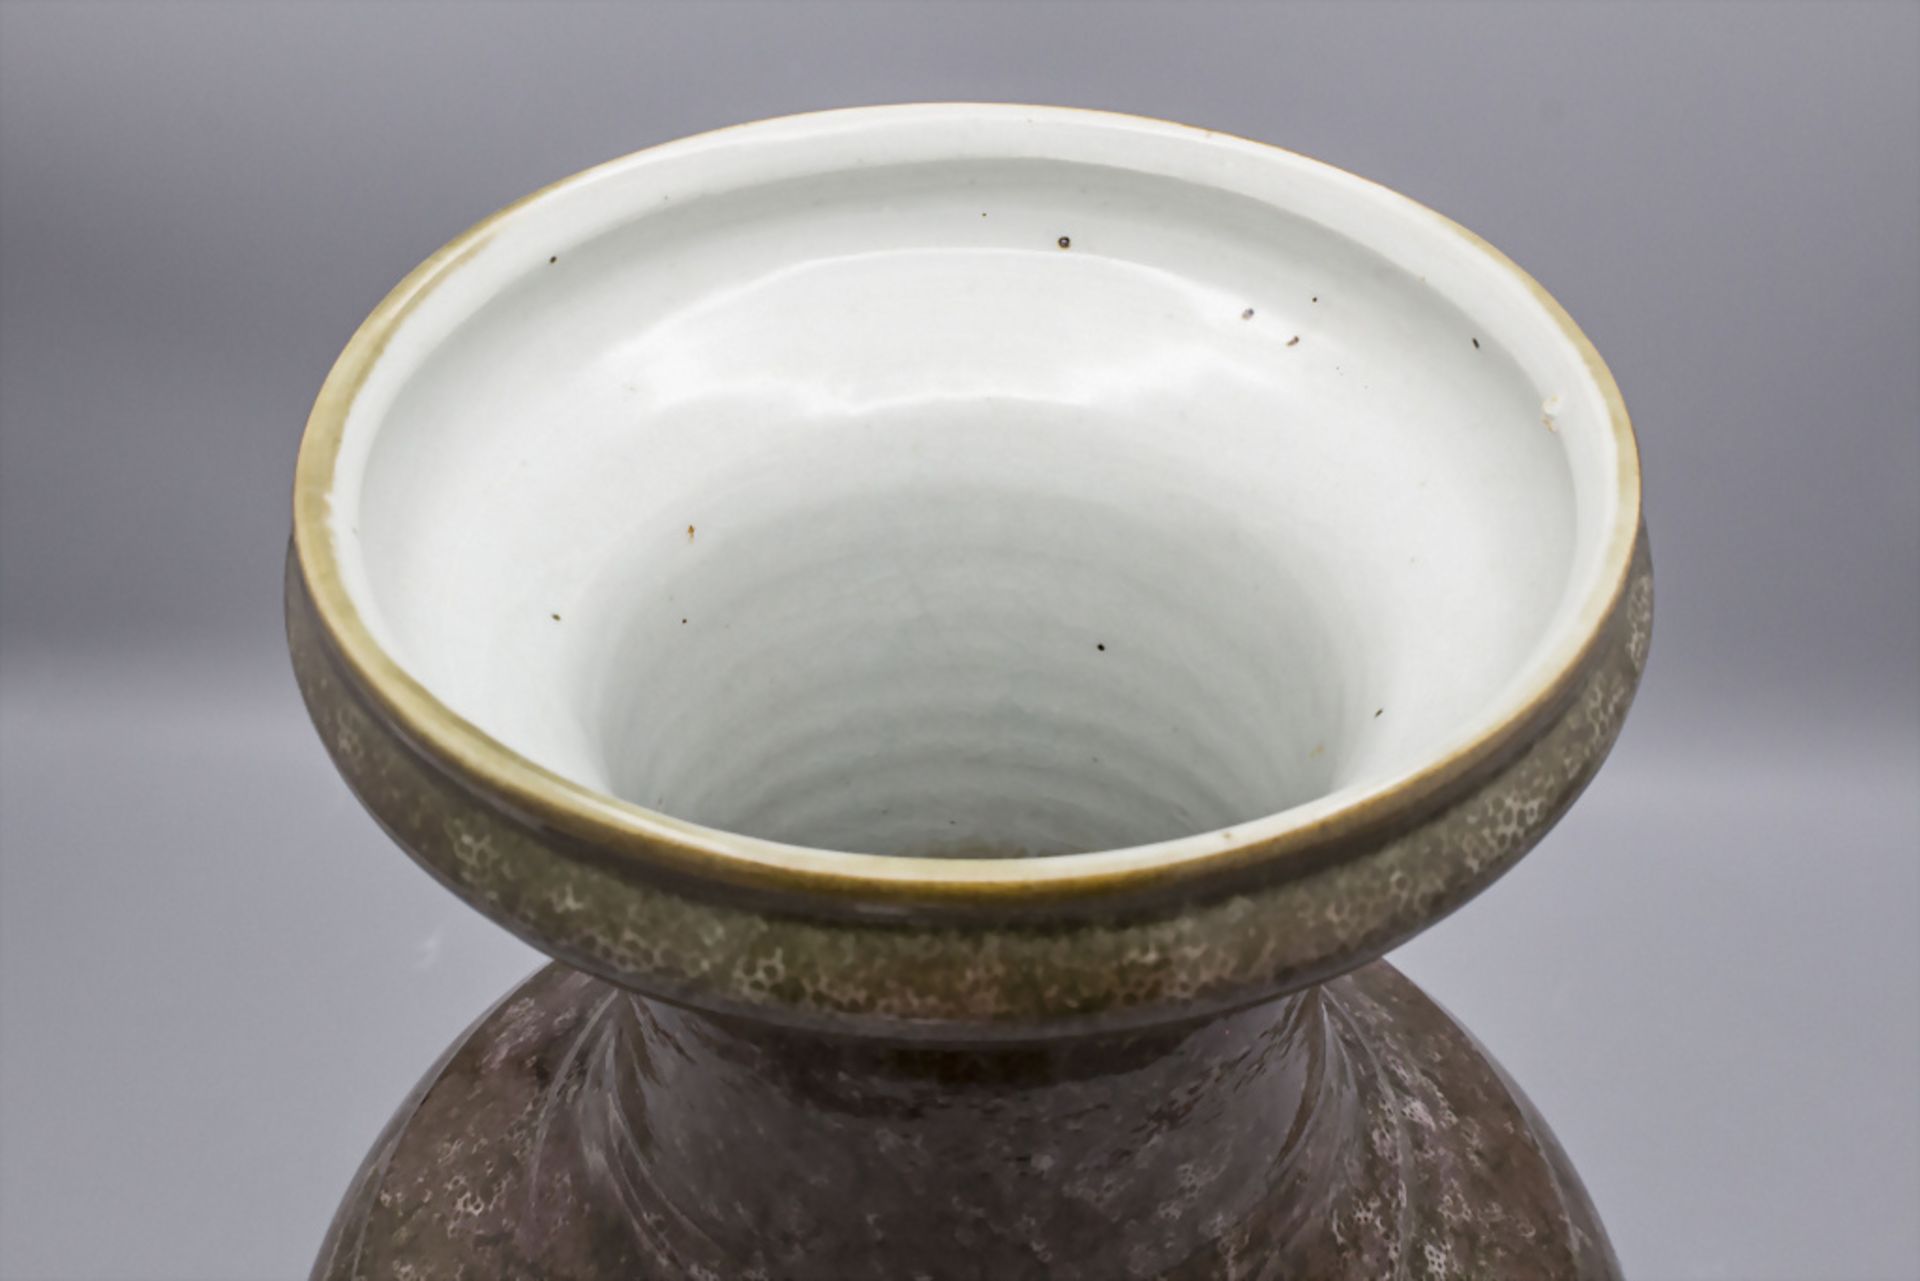 Seltene Vase / A rare porcelain vase, China, Qing Dynastie (1644-1911), gemarkt Kangxi (1662-1722) - Image 2 of 4